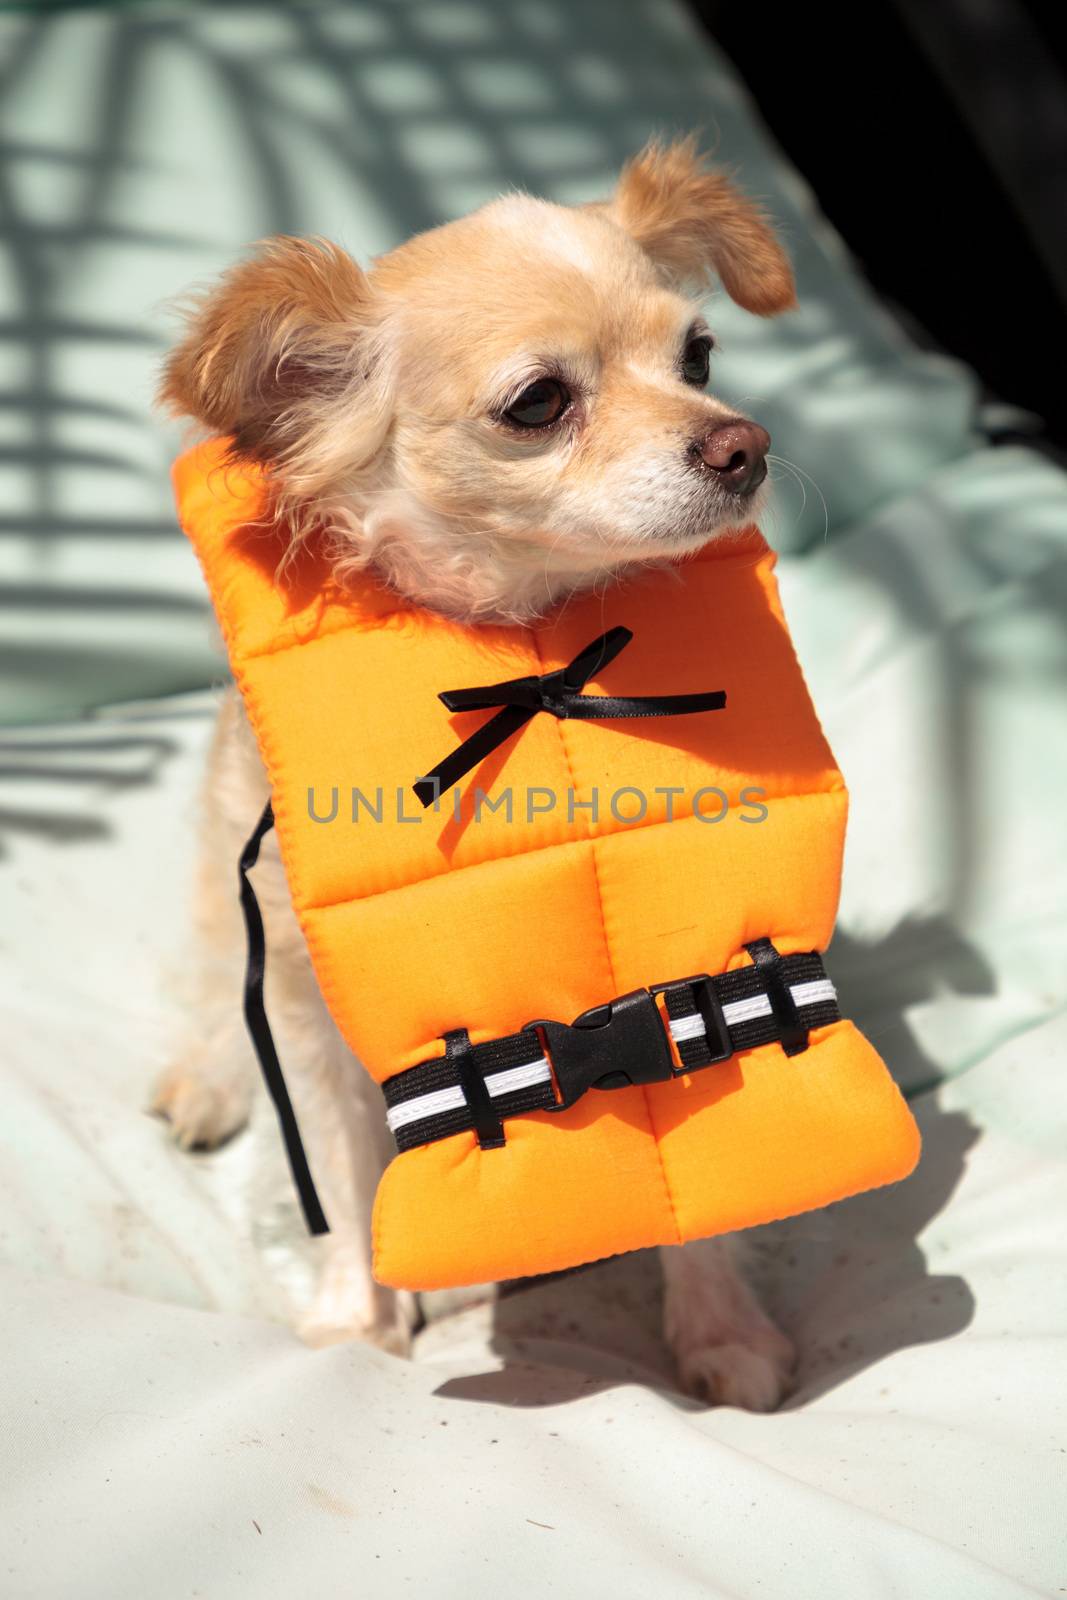 Cute Chihuahua dog in a Halloween costume nautical orange life v by steffstarr